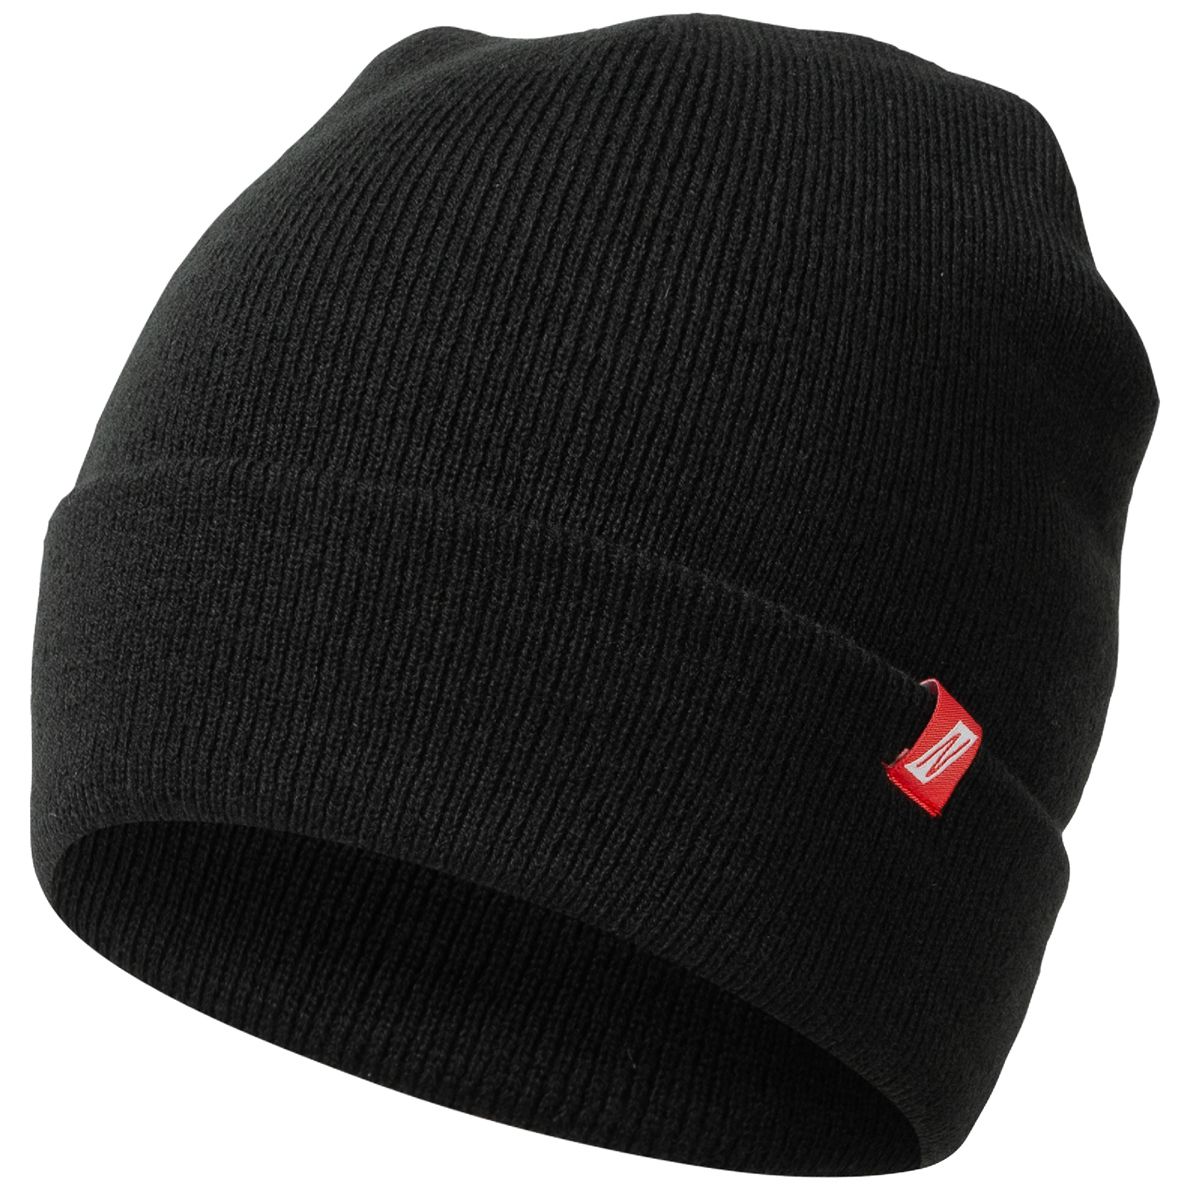 Nitras 731-1000 Winter Hat - Warm Beanie for Women & Men - Black